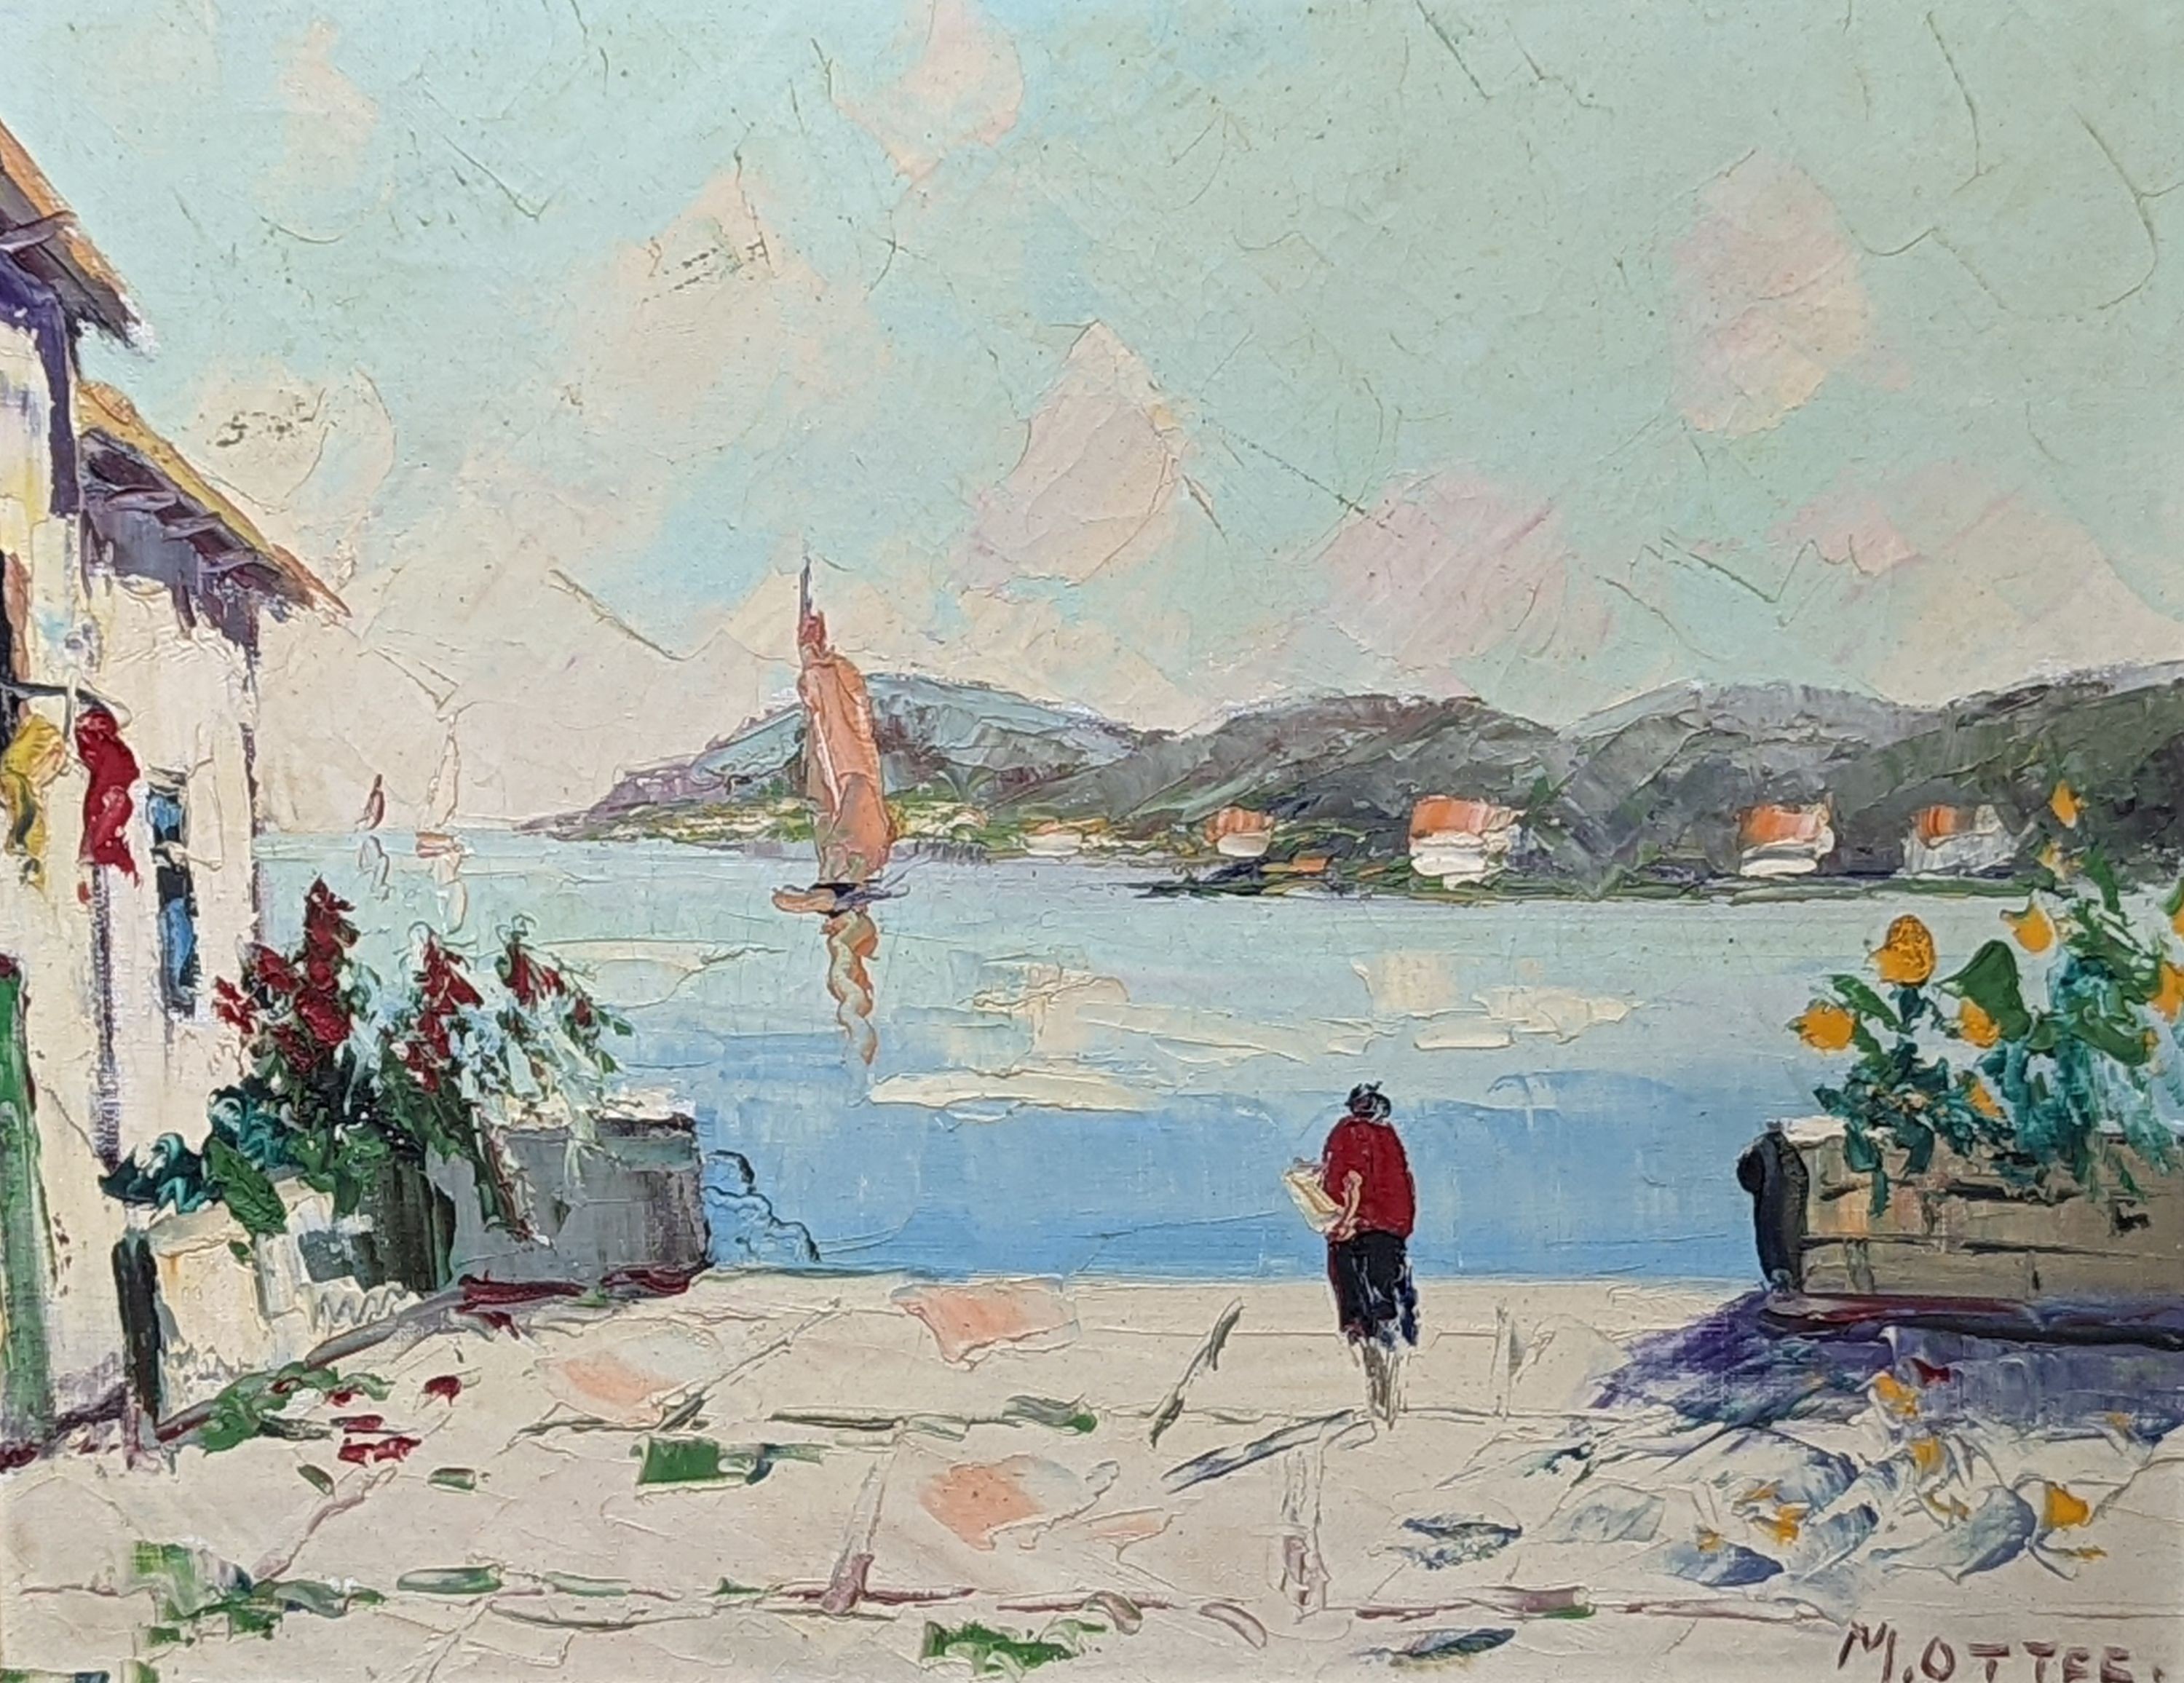 Marc Ottee (1898-1982), oil on canvas, An Italian lakeside, signed, 40 x 50cm